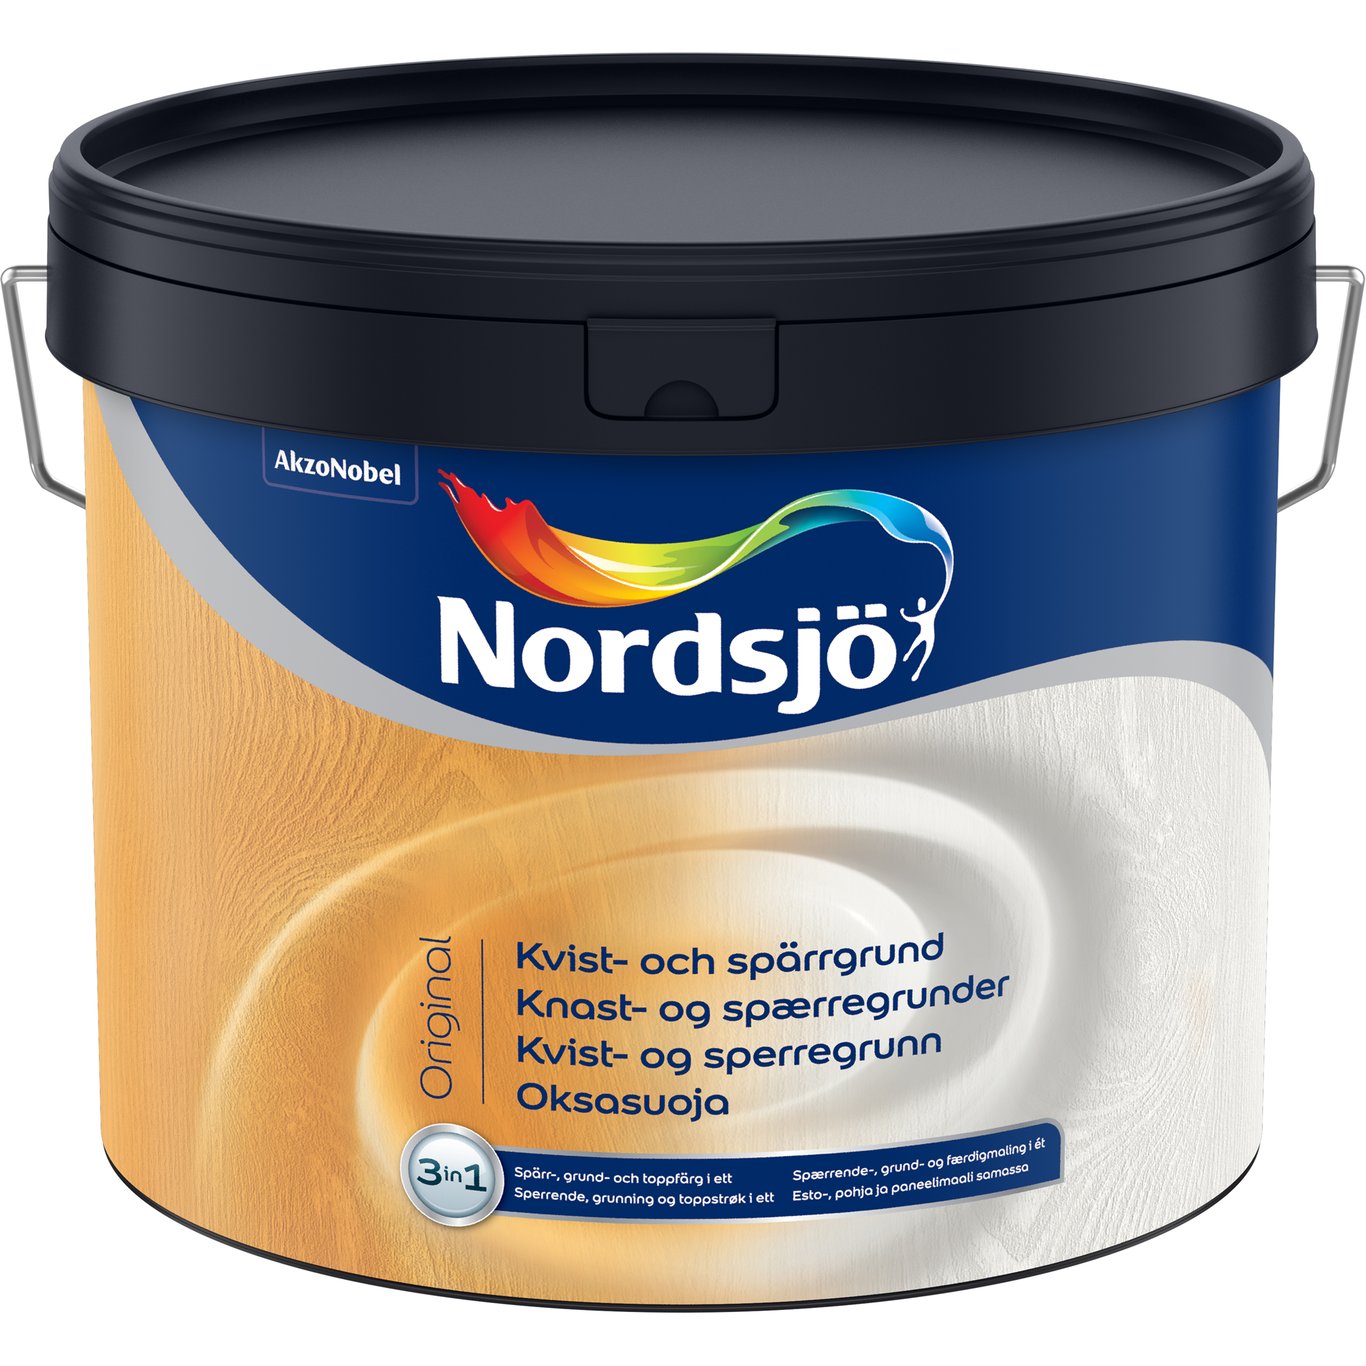 NORDSJØ ORIGINAL KVIST- OG SPERREGRUNN 2,5L